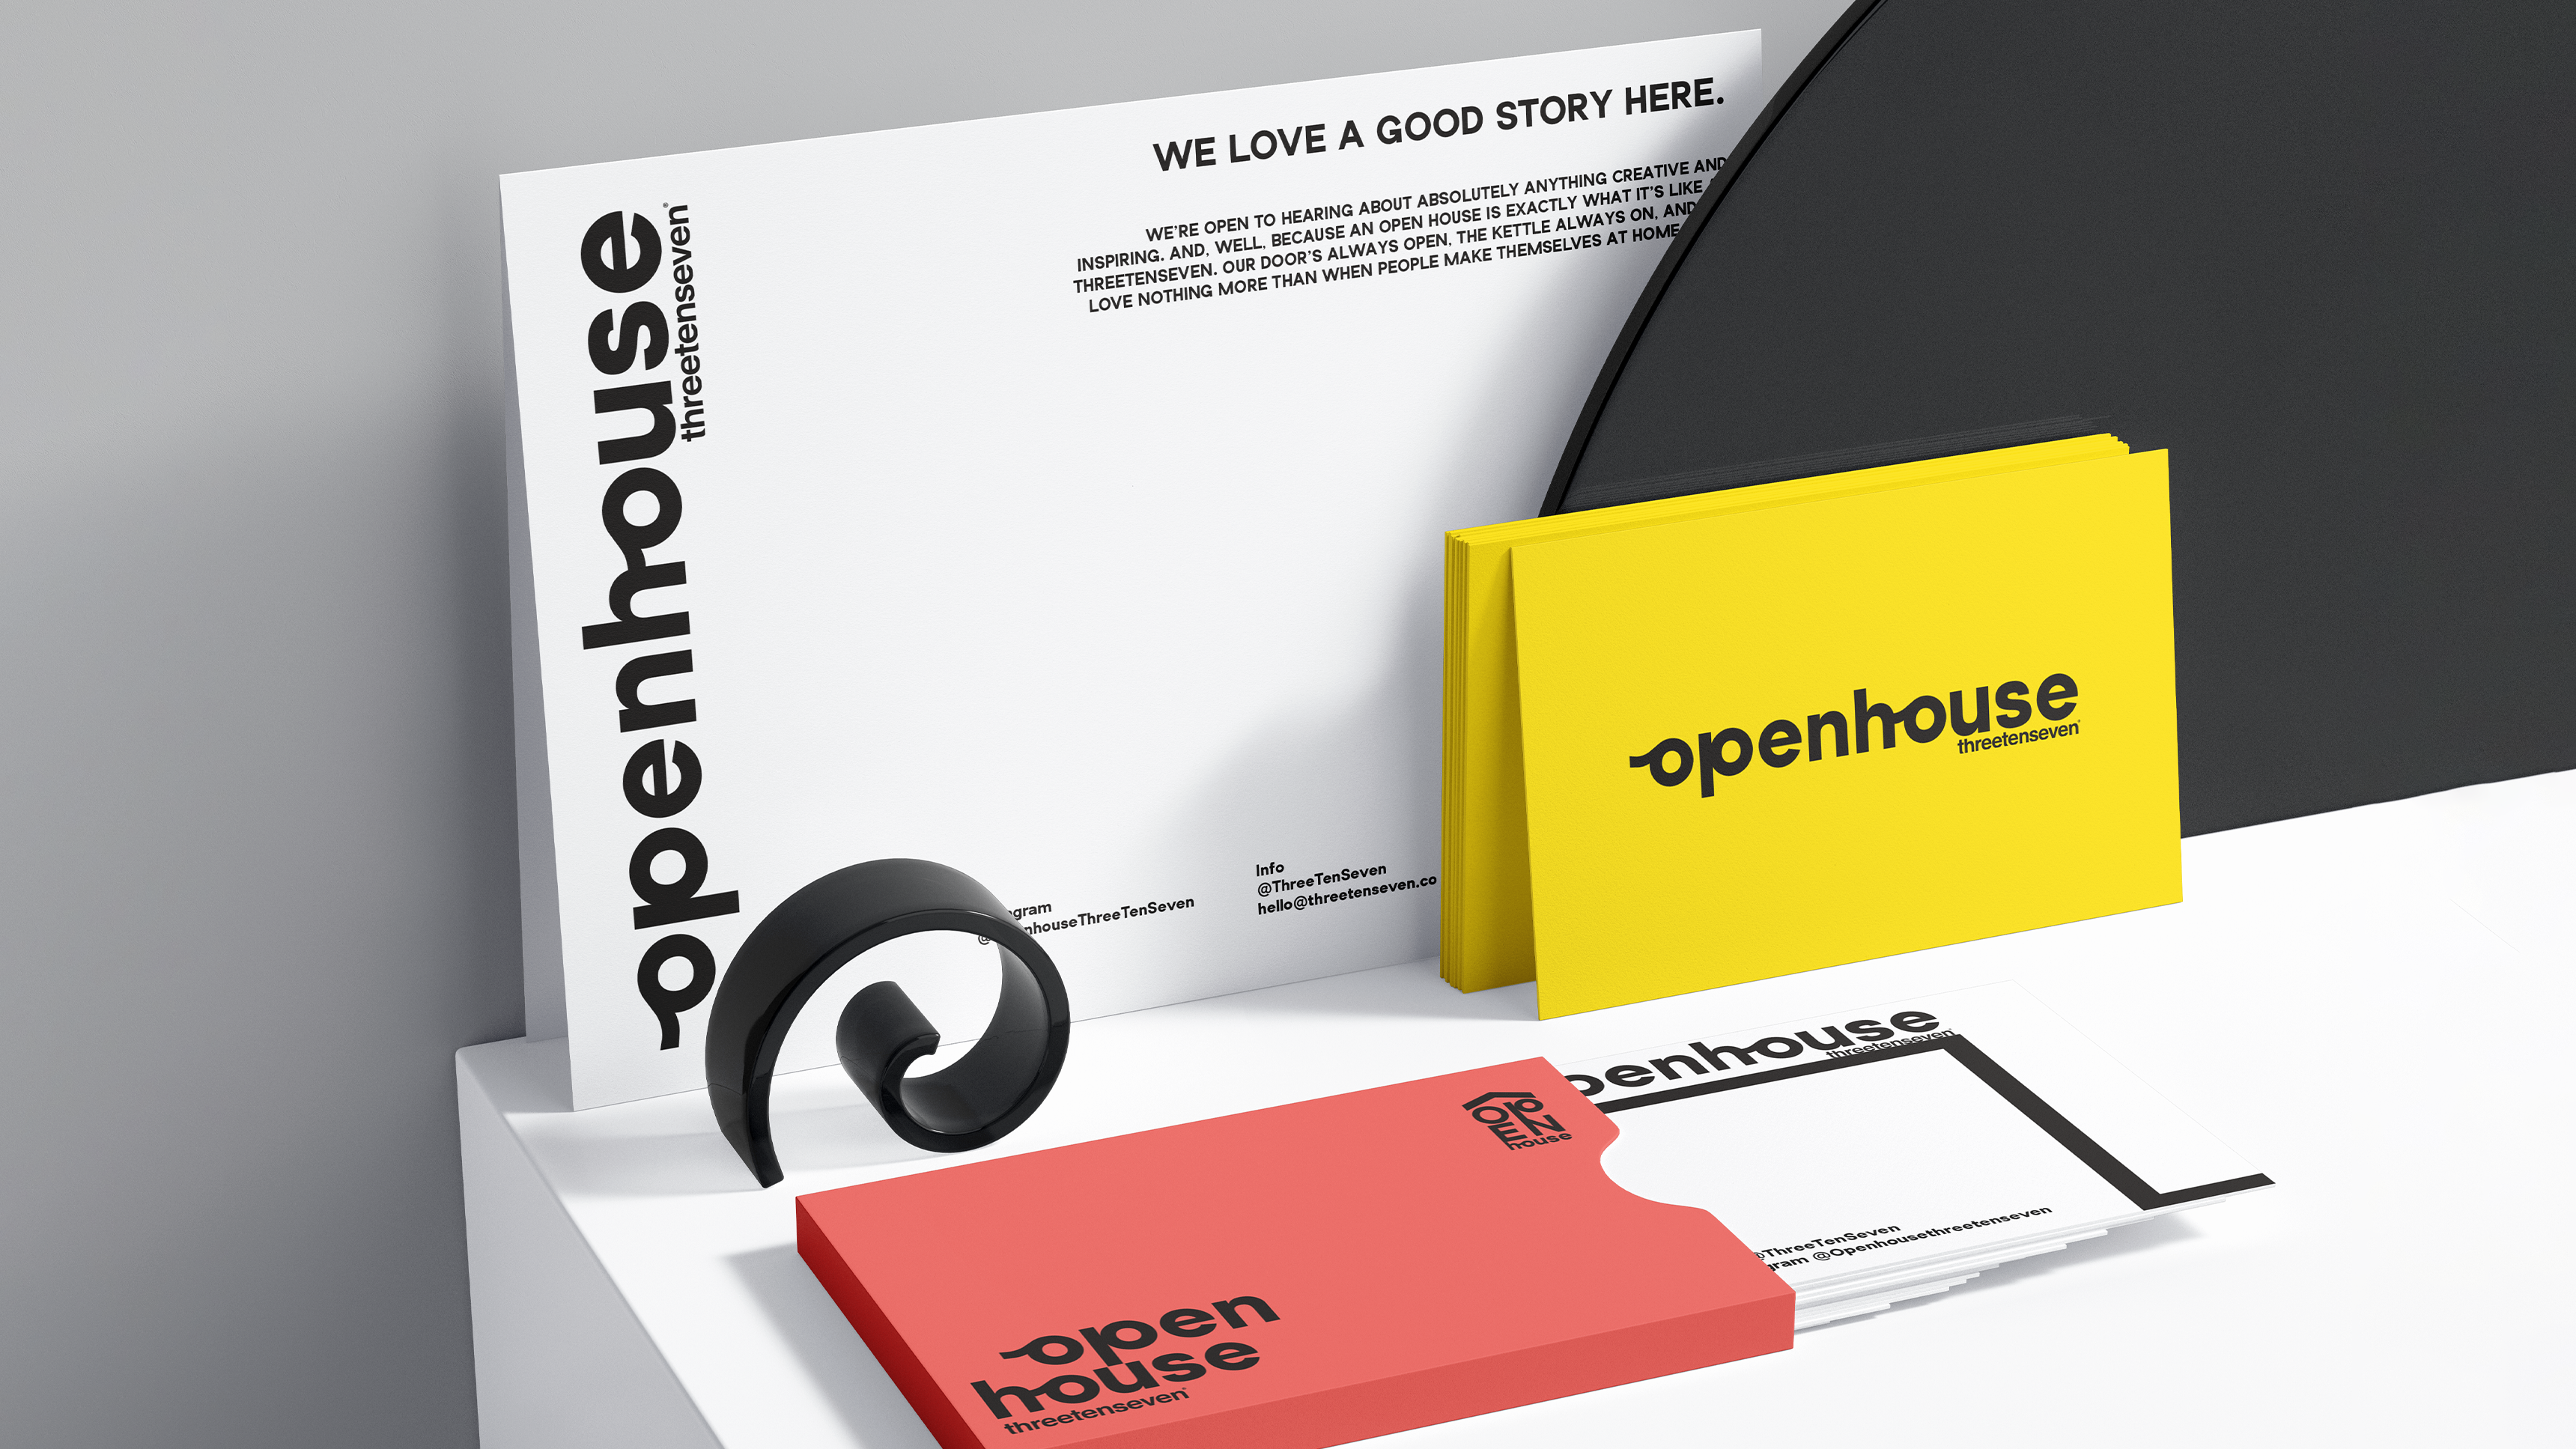 Openhouse design work on stationery